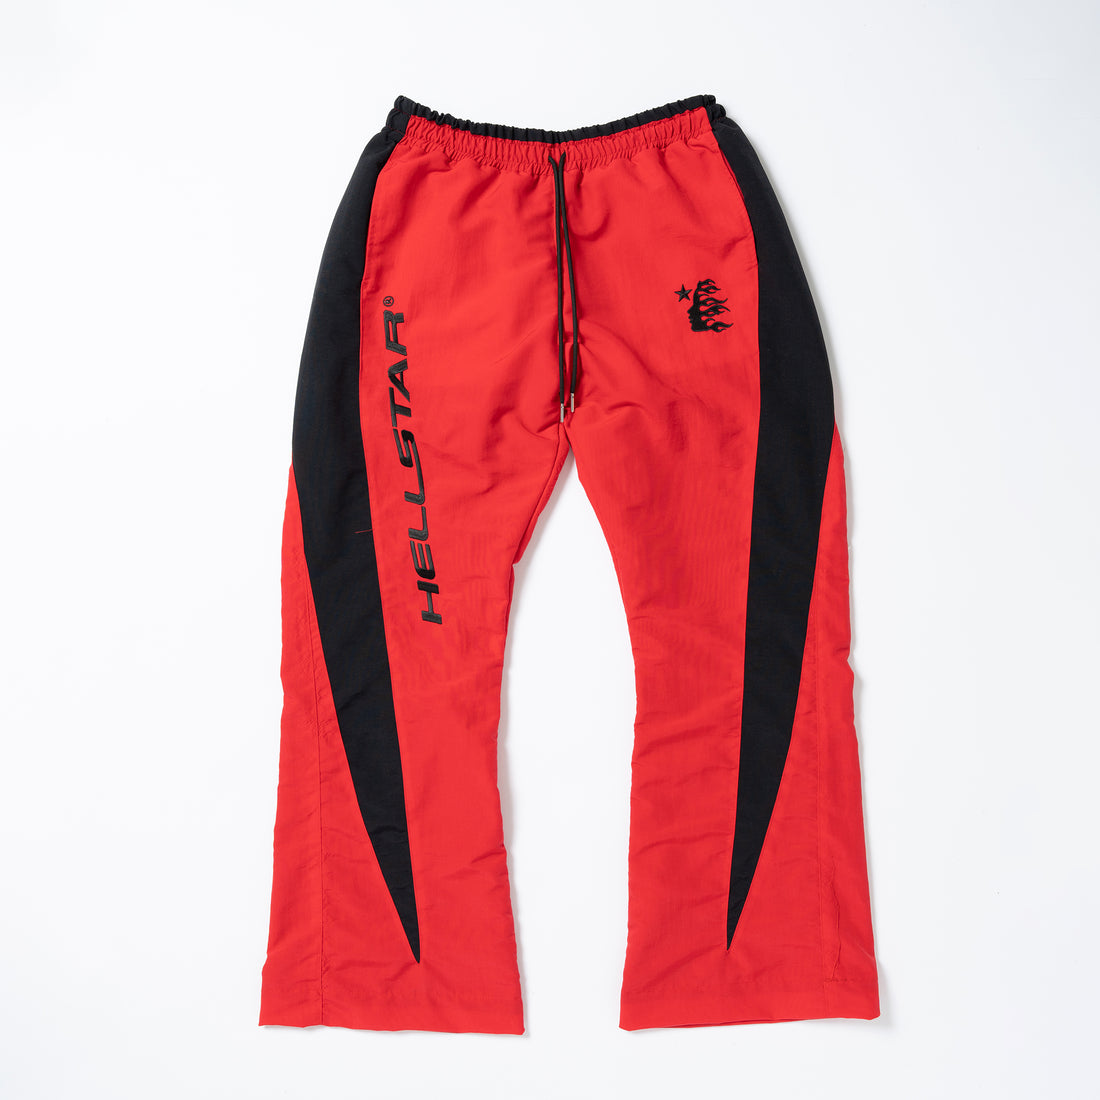 Thriller Red SweatsPants | Buy Thriller Red SweatsPants Online | Where To Buy Thriller Red SweatsPants | Thriller Red SweatsPants For Sale